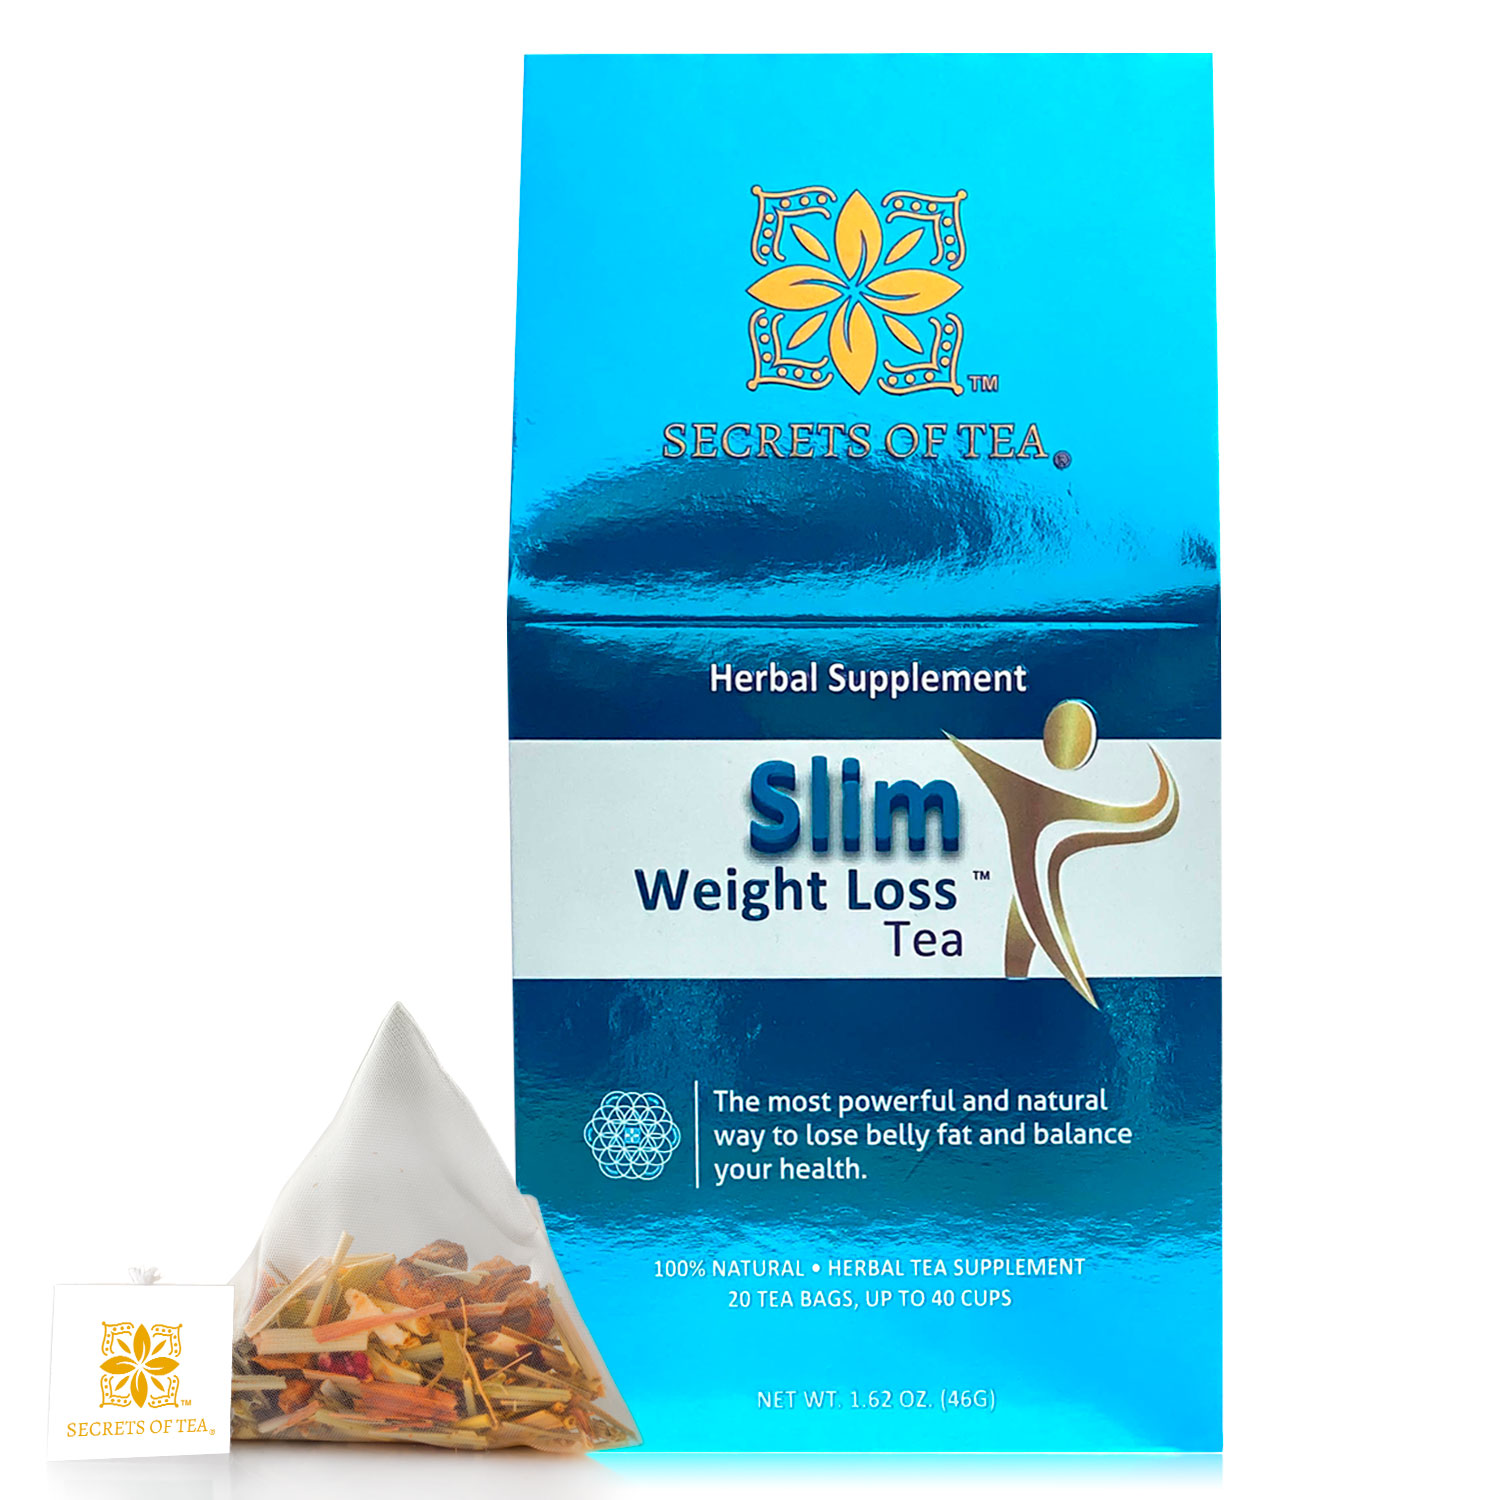 Secrets of Tea Slim Weight Loss Tea 2 innerpacks per case 2.0 oz